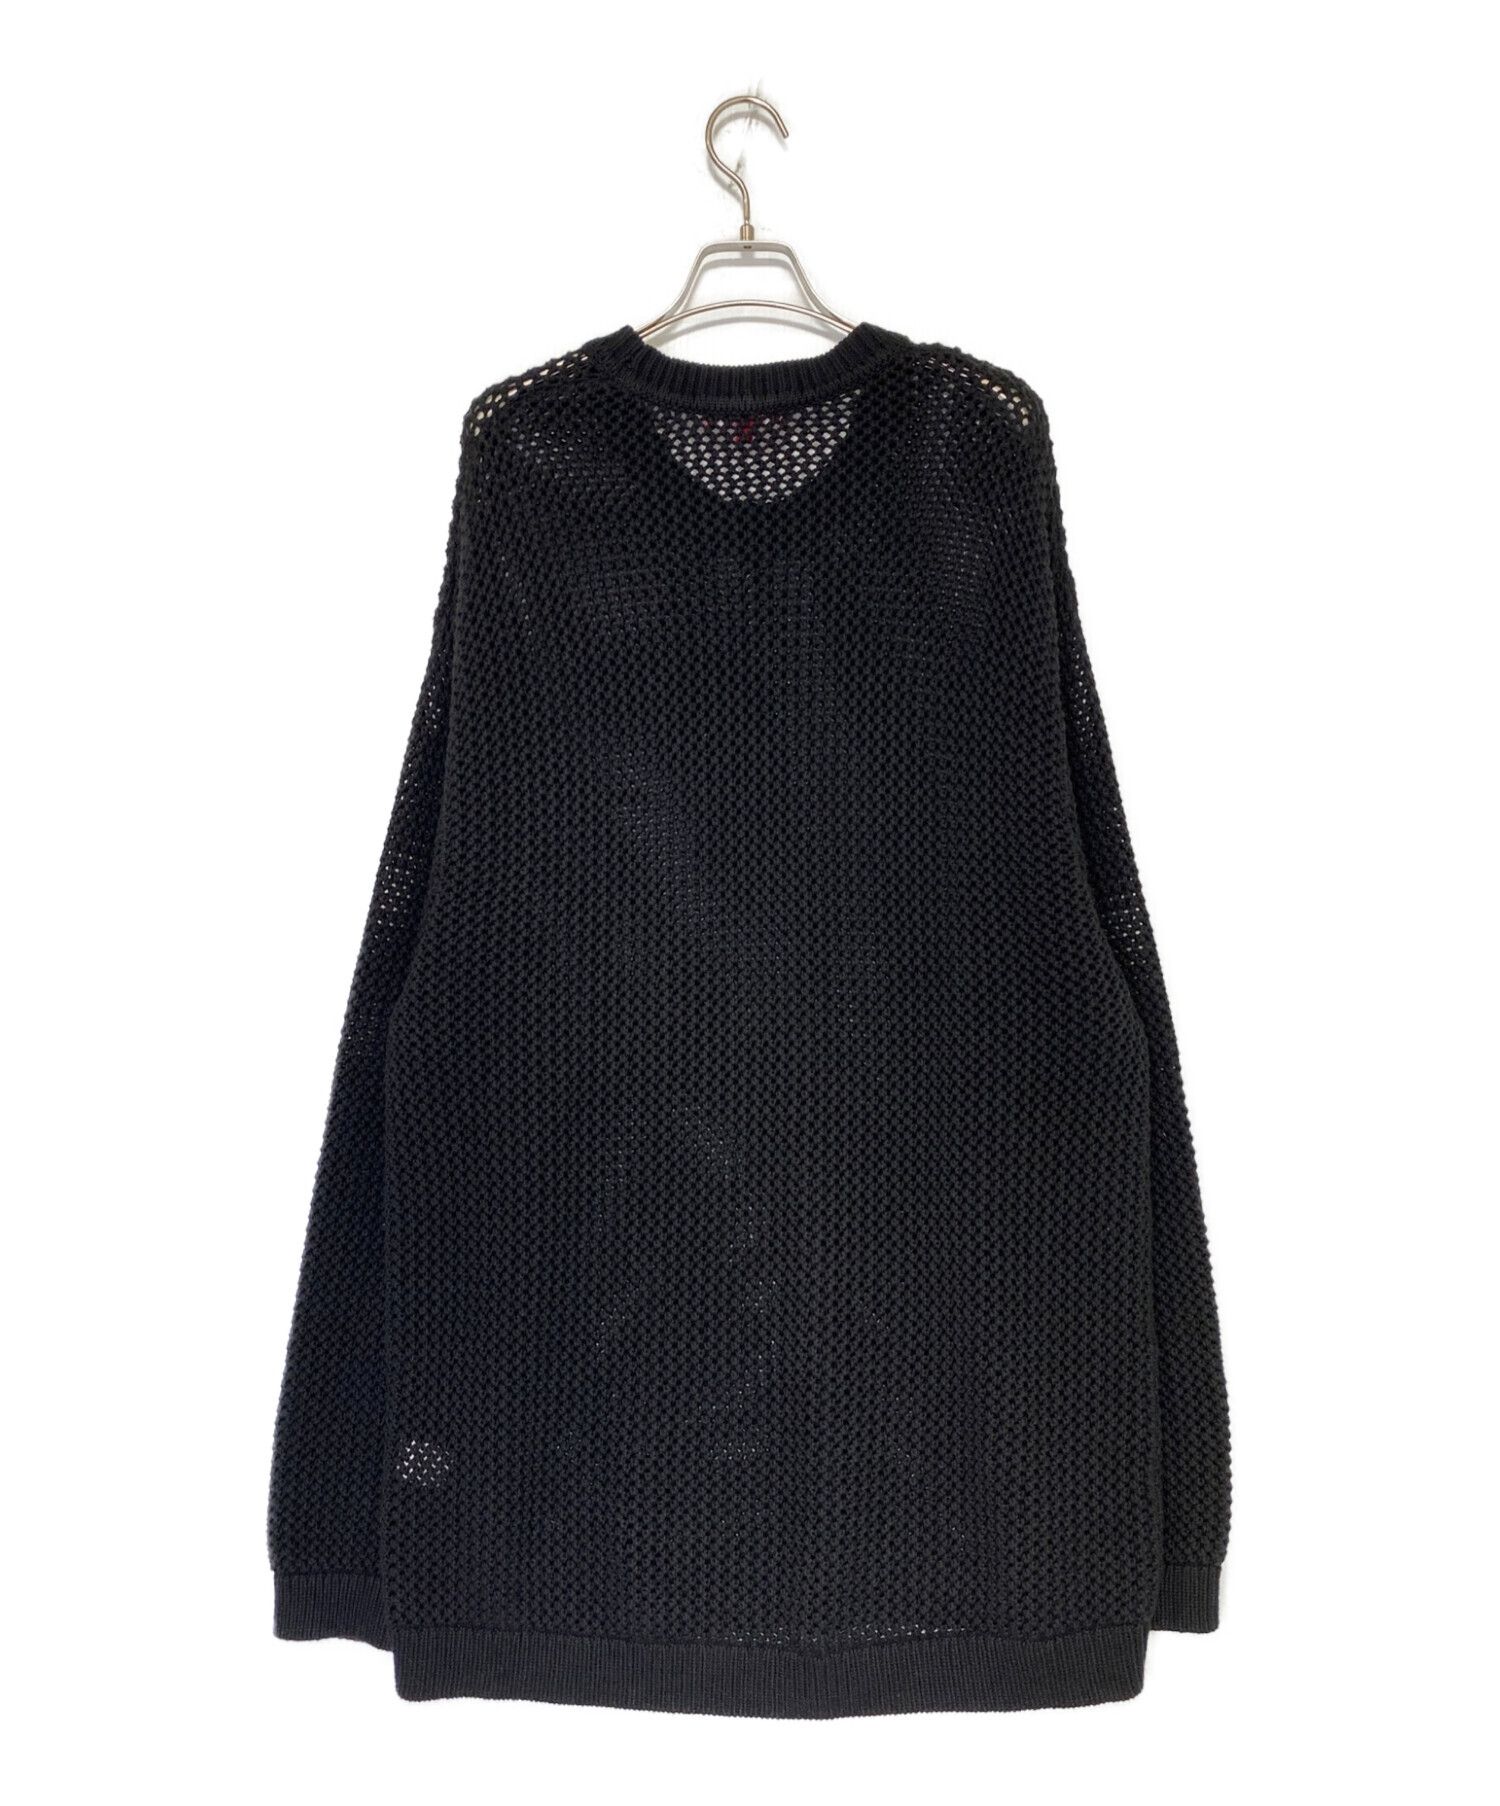 Supreme Open Knit Small Box Sweater 黒 demos-link.com